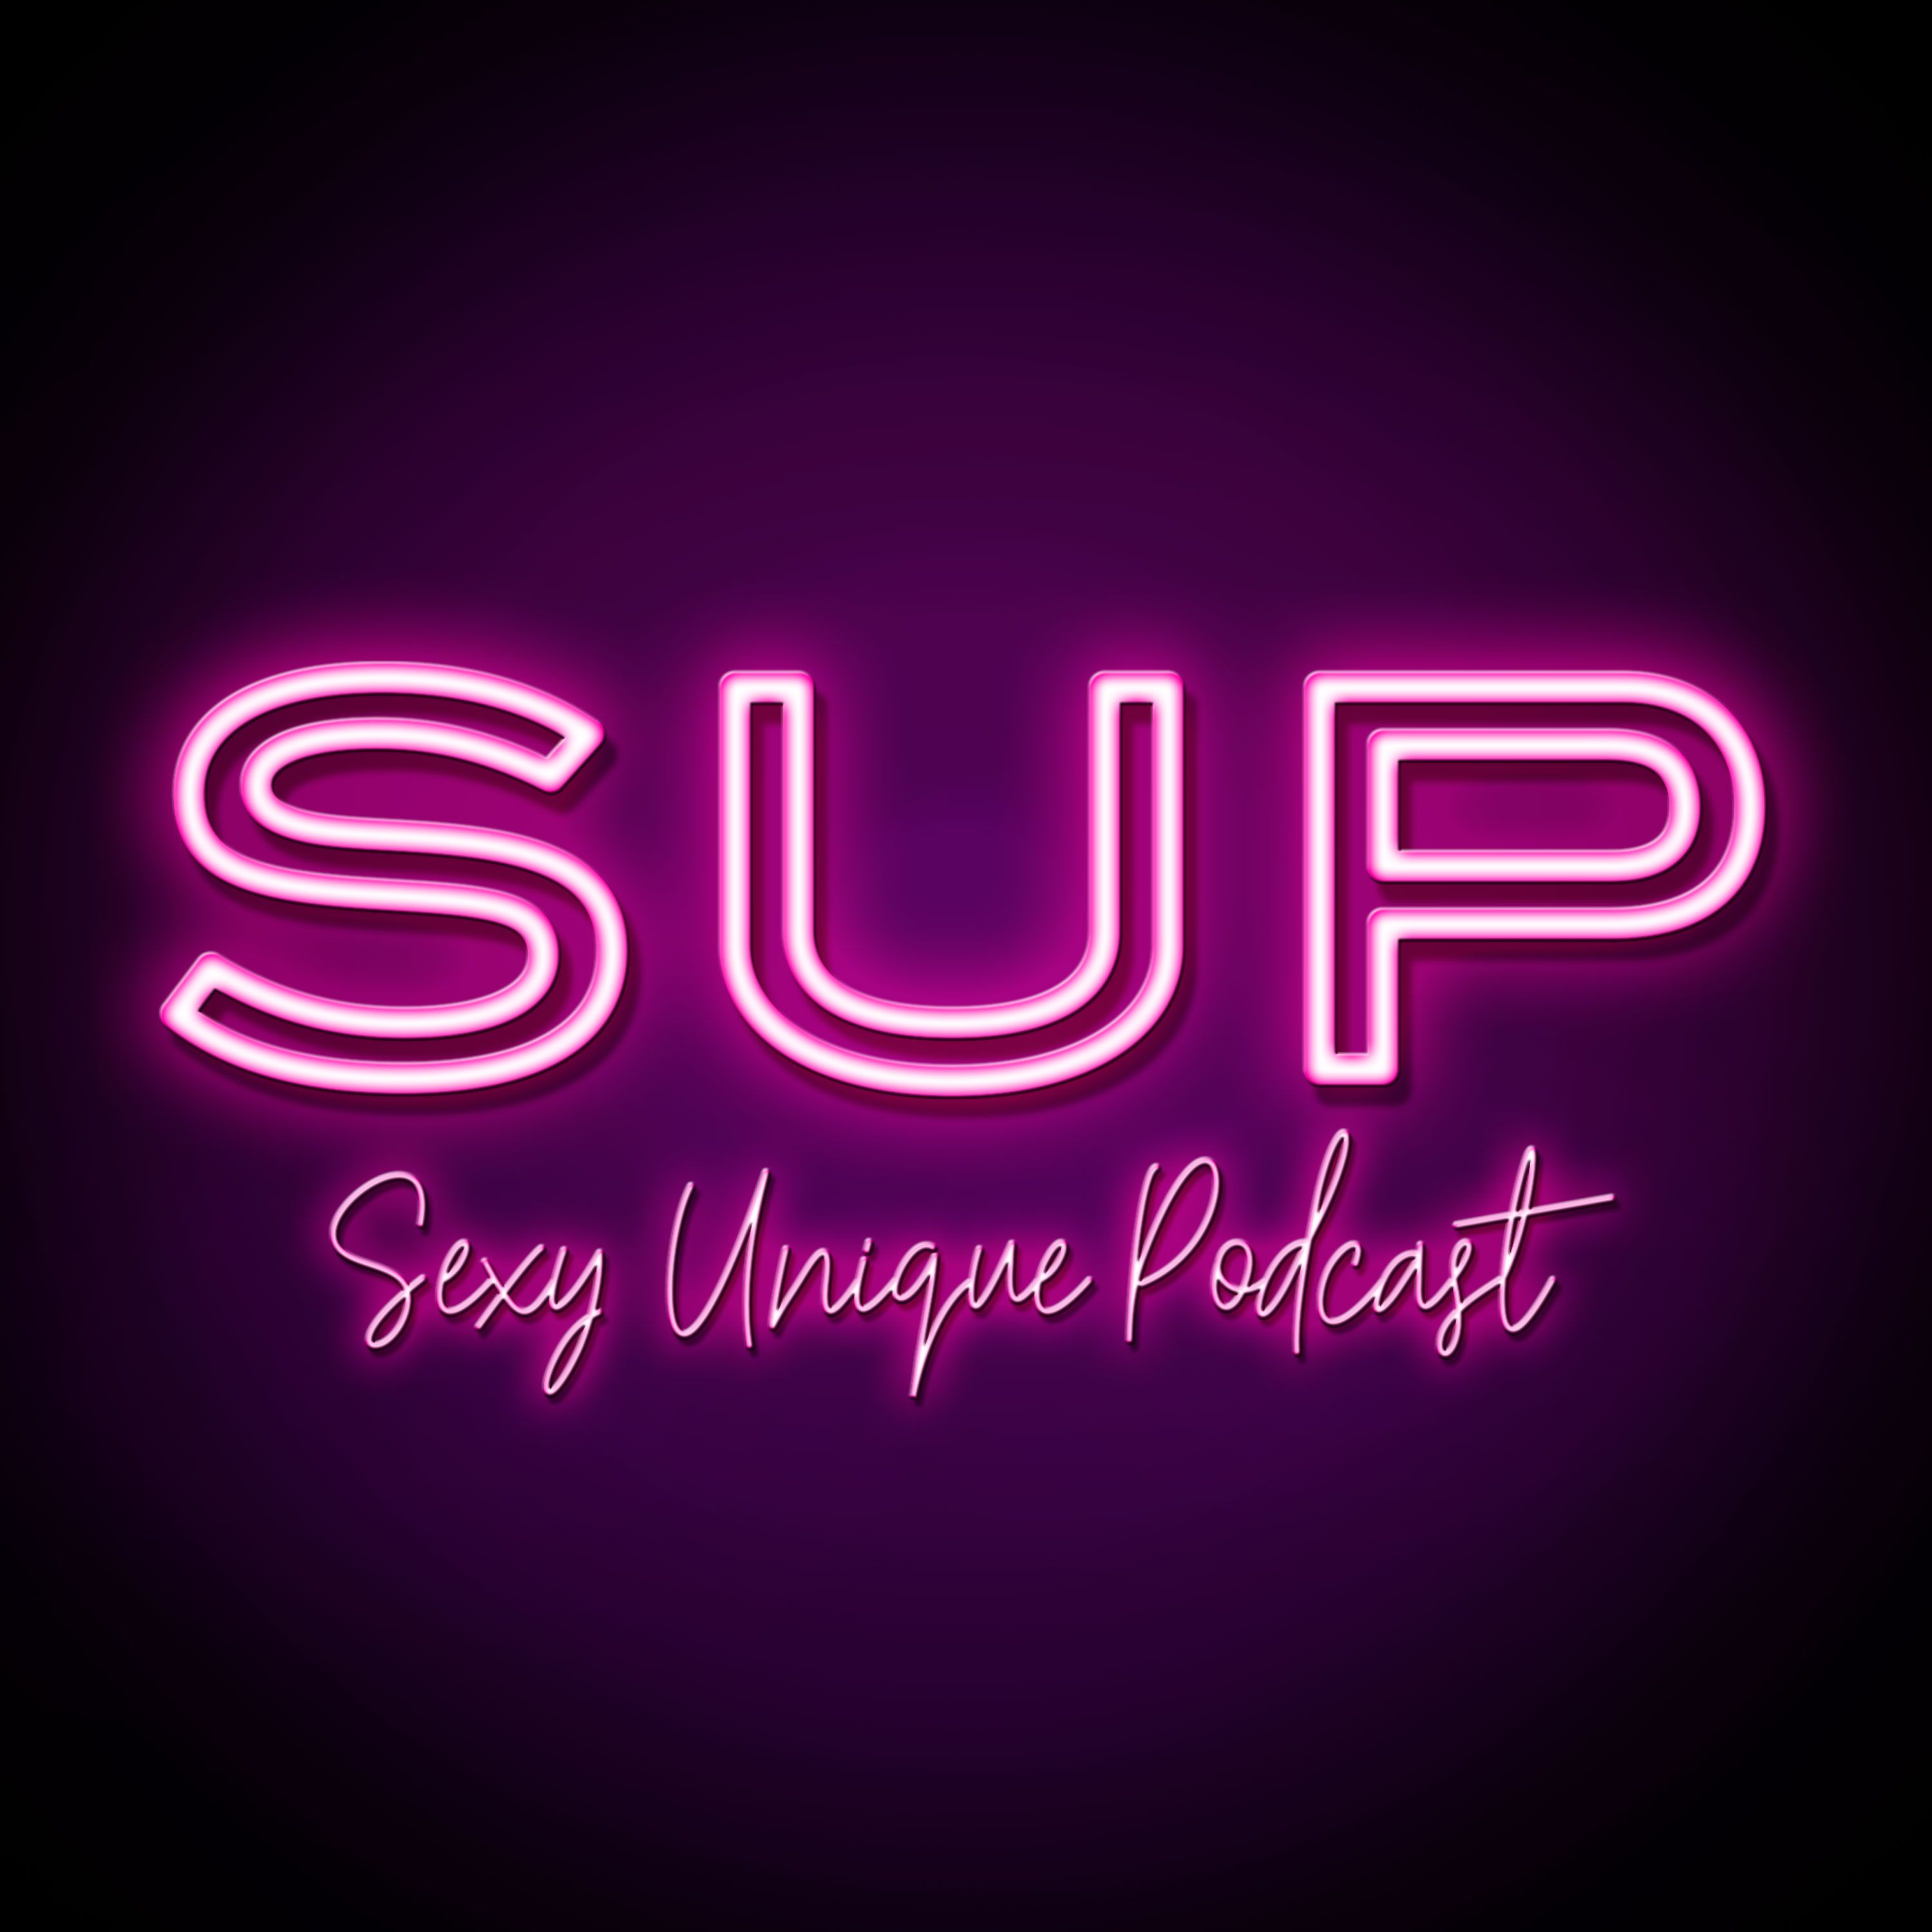 Sexy Unique Podcast Live! ft. Pat Regan, Jake Shears & Ciara Pavia